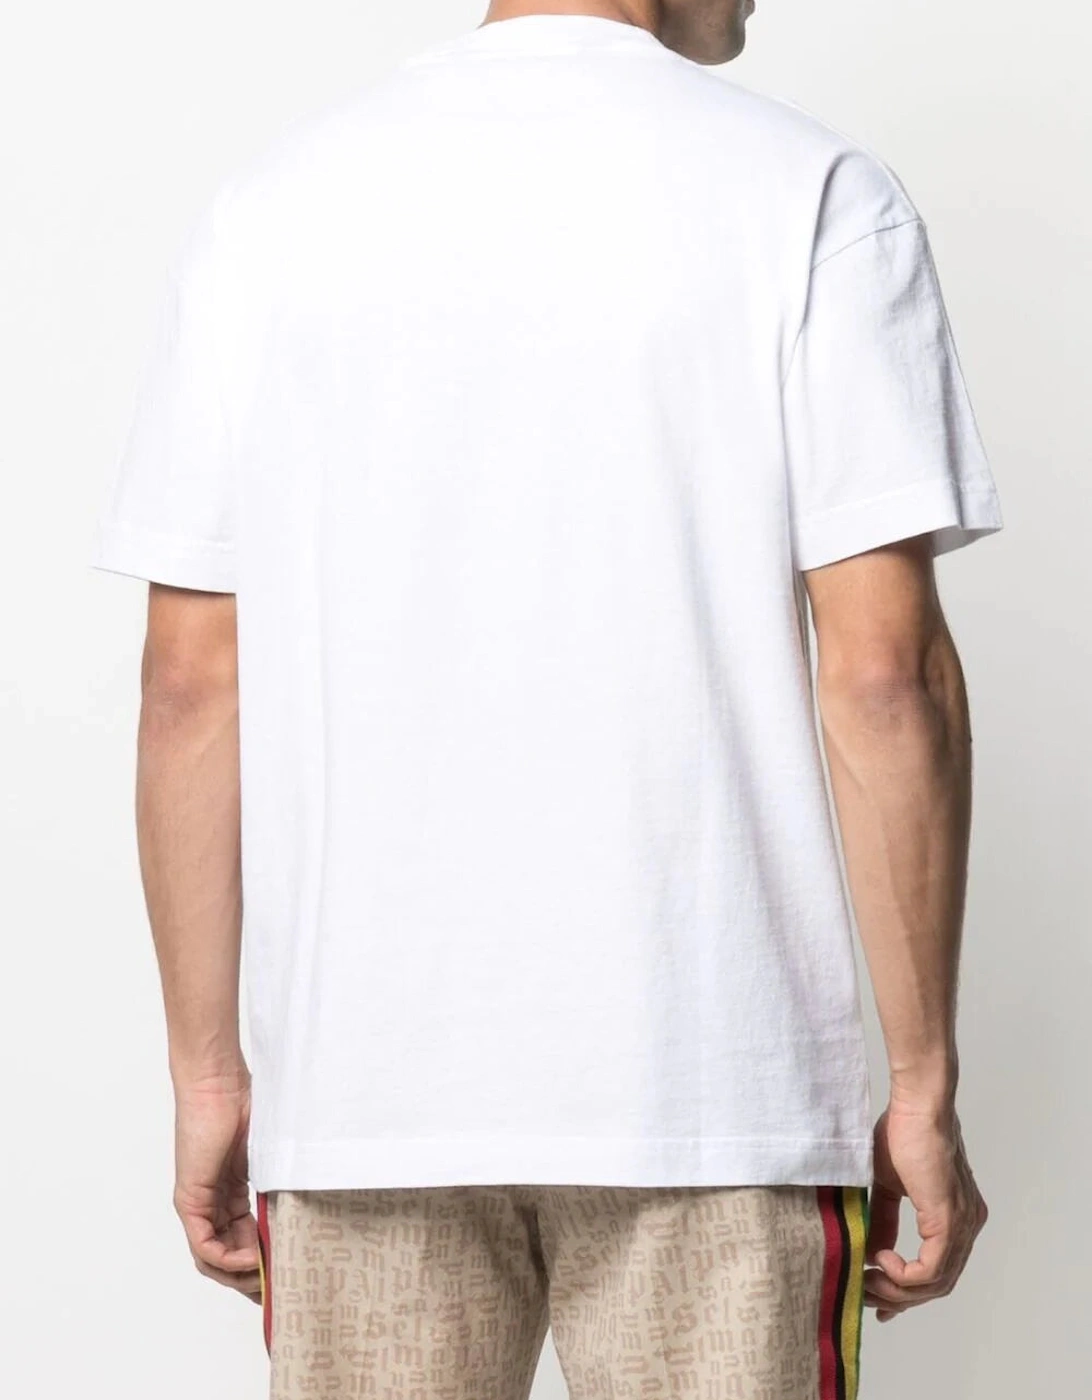 Los Angeles Yellow Sprayed Logo T-Shirt in White